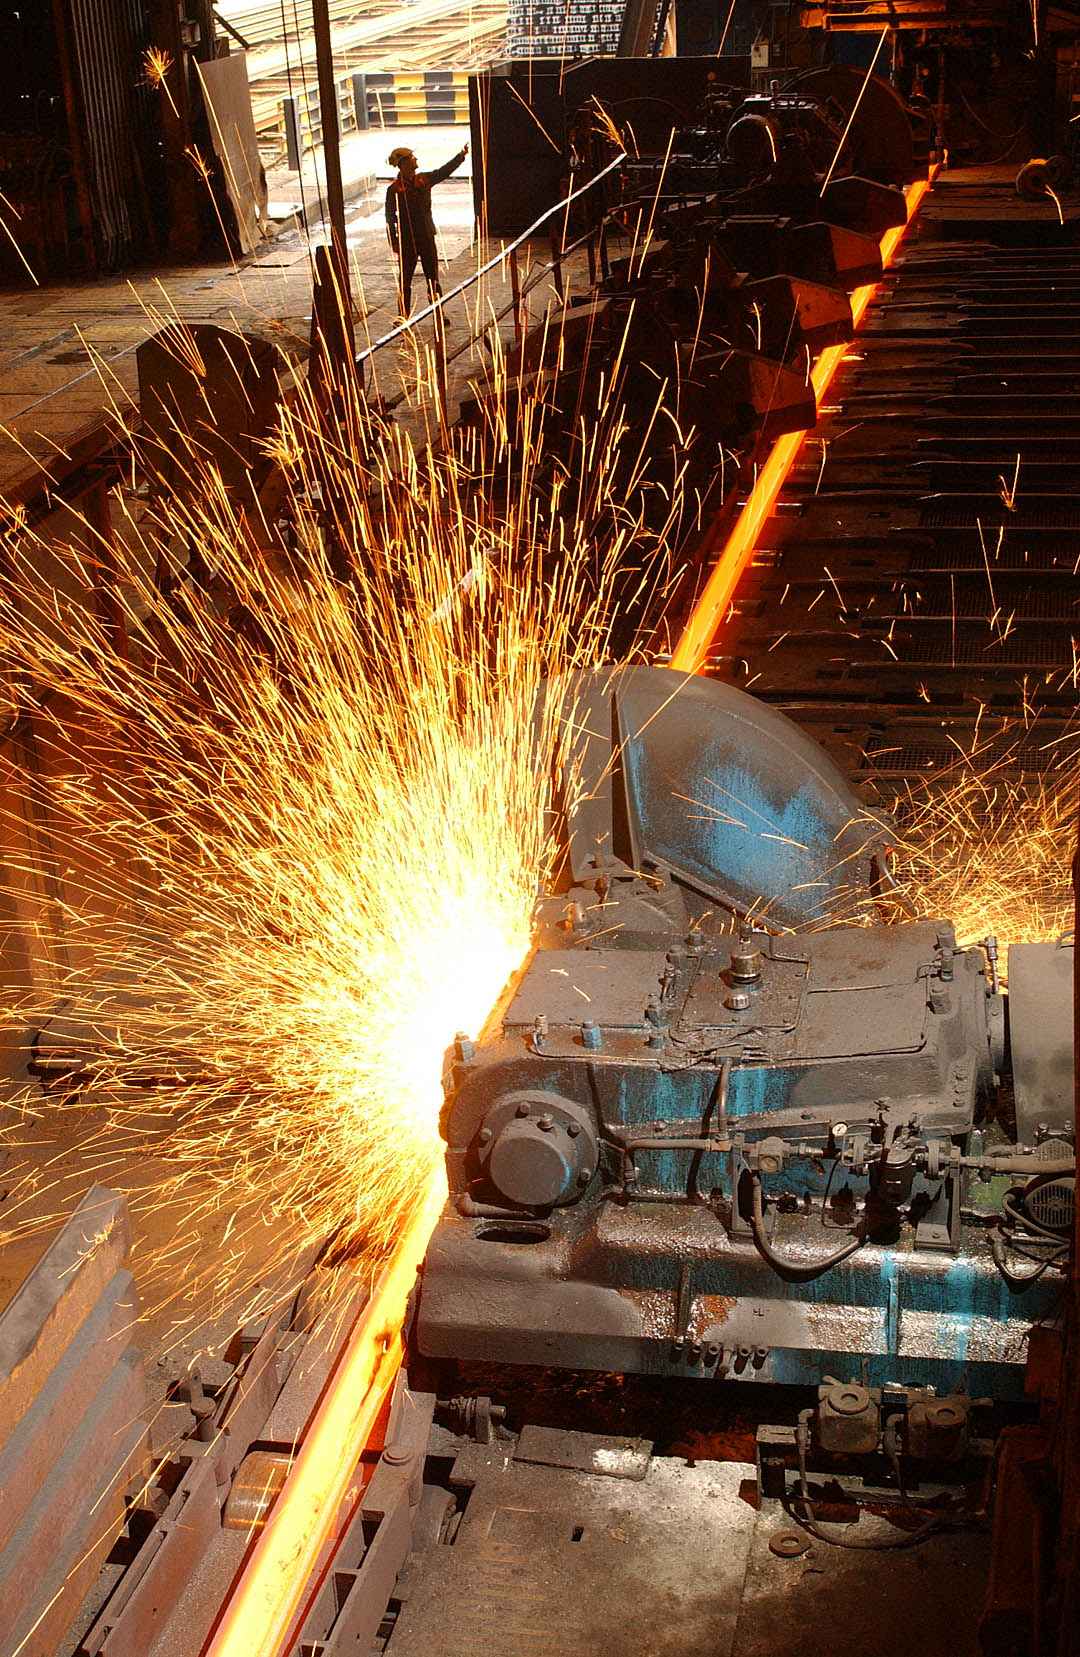 Commercial Photographer: Steel Manufacture, Railway Rails, Cutting line, Workington, England, UK